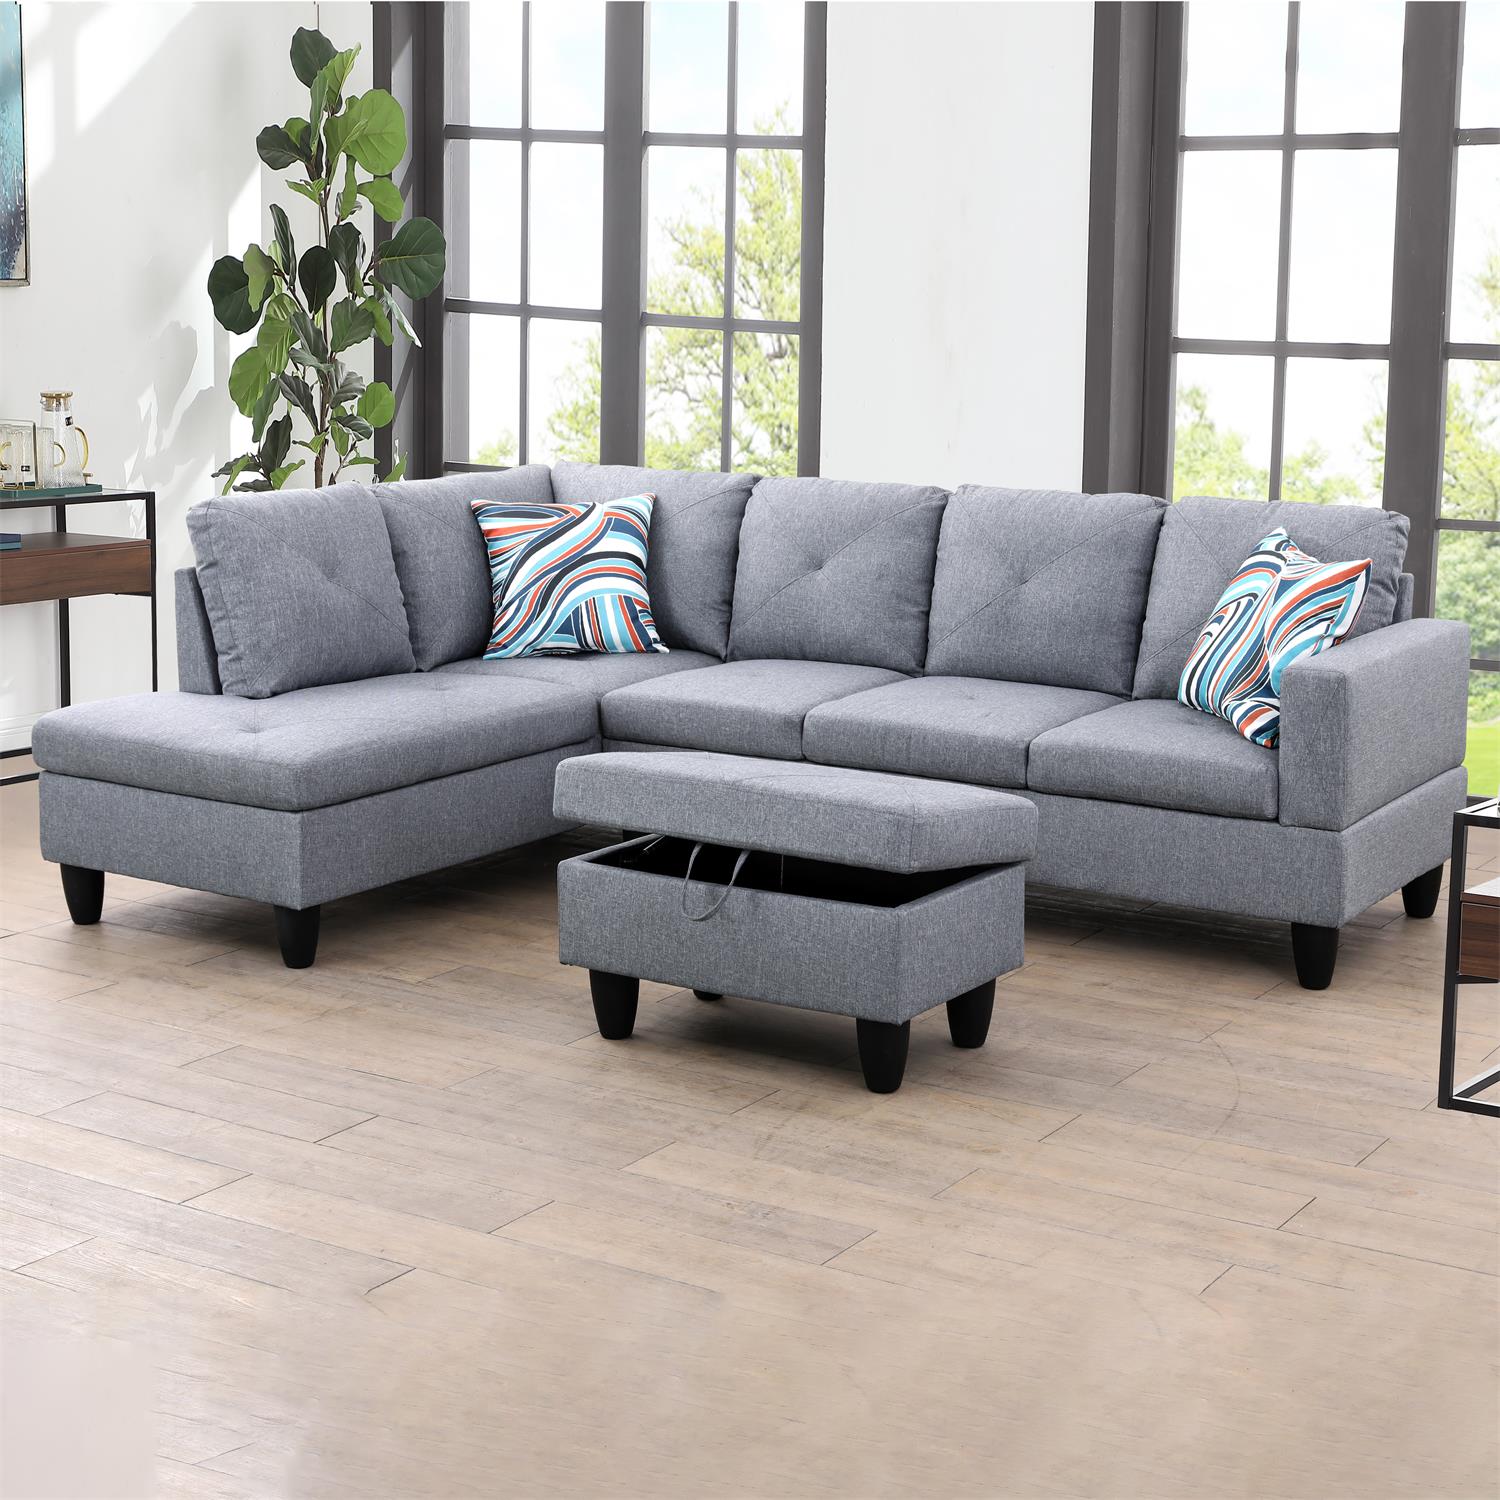 Ainehome Grey L-Shaped Linen Sofa Set